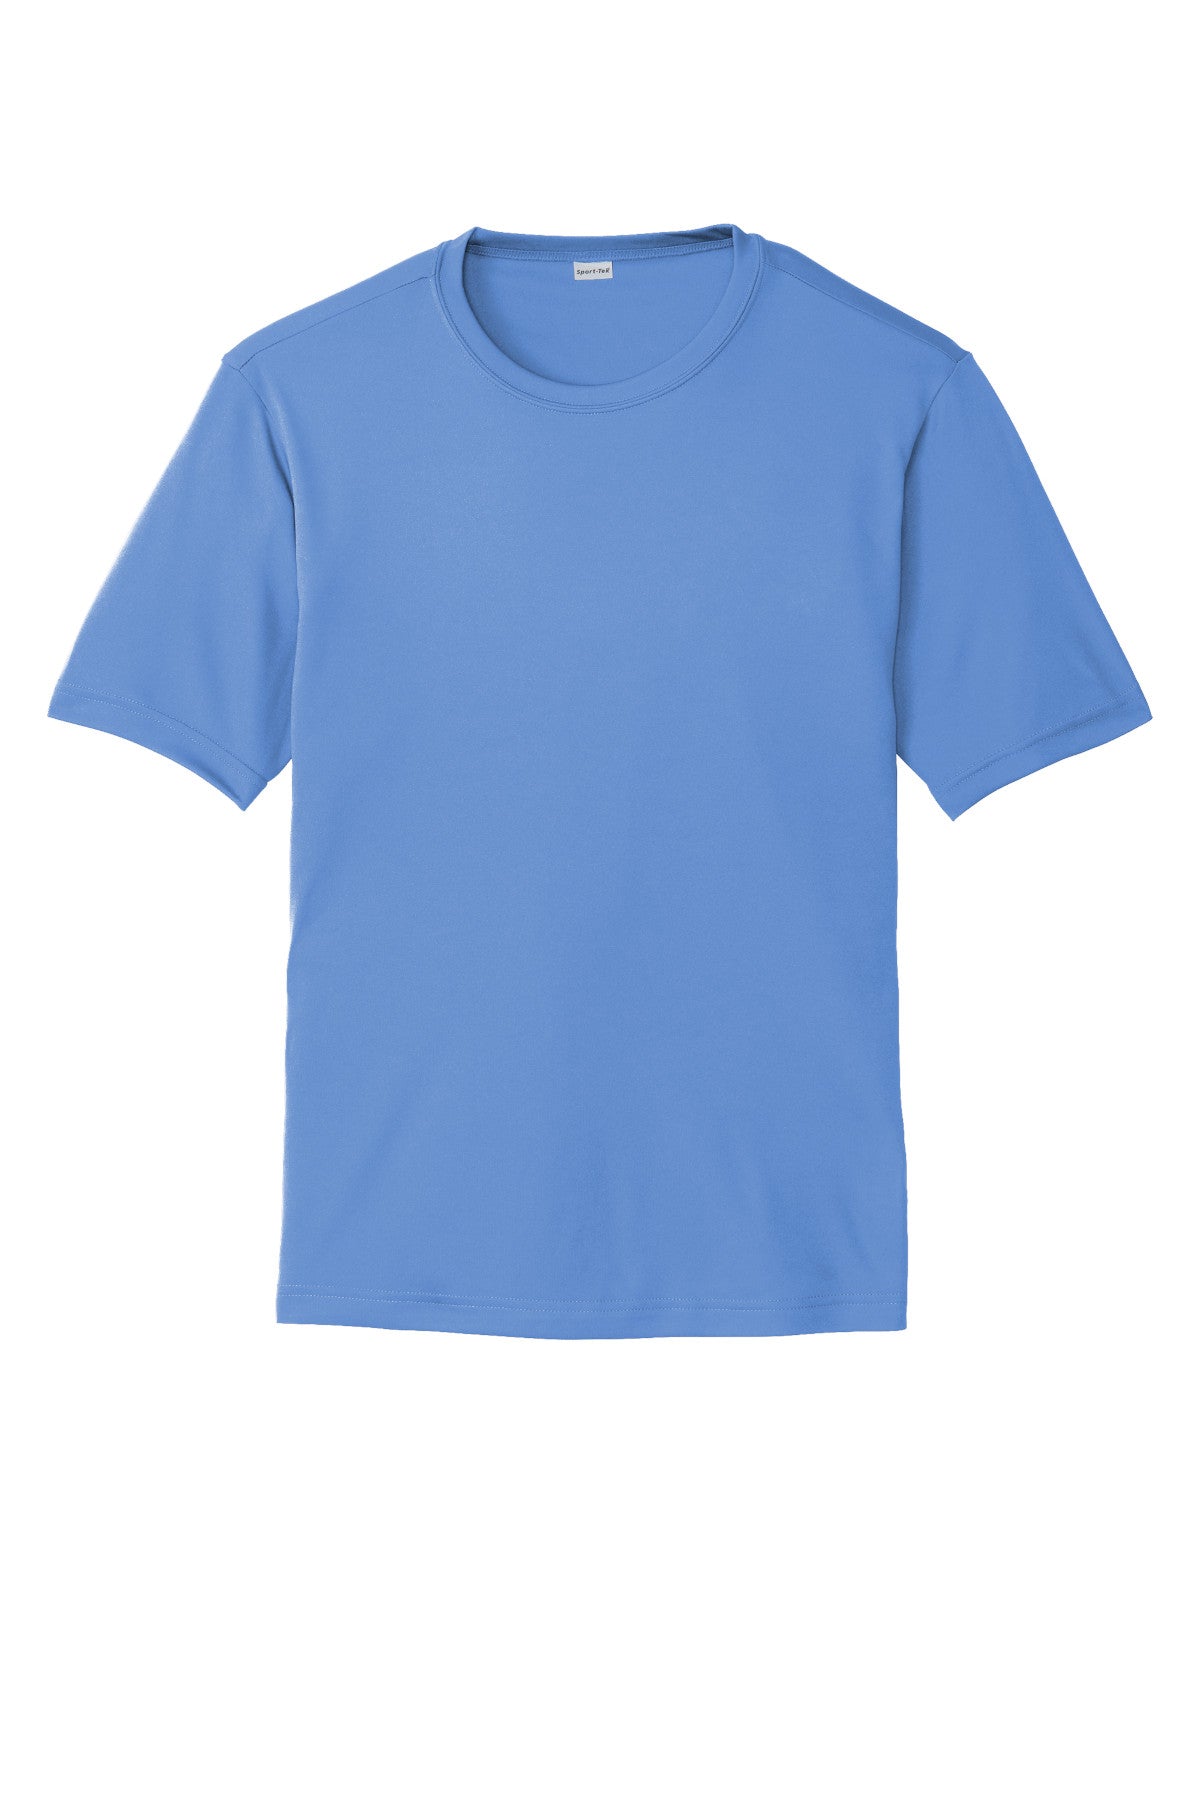 Sport-Tek St350 Polyester Adult T-Shirt Ad Small / Carolina Blue